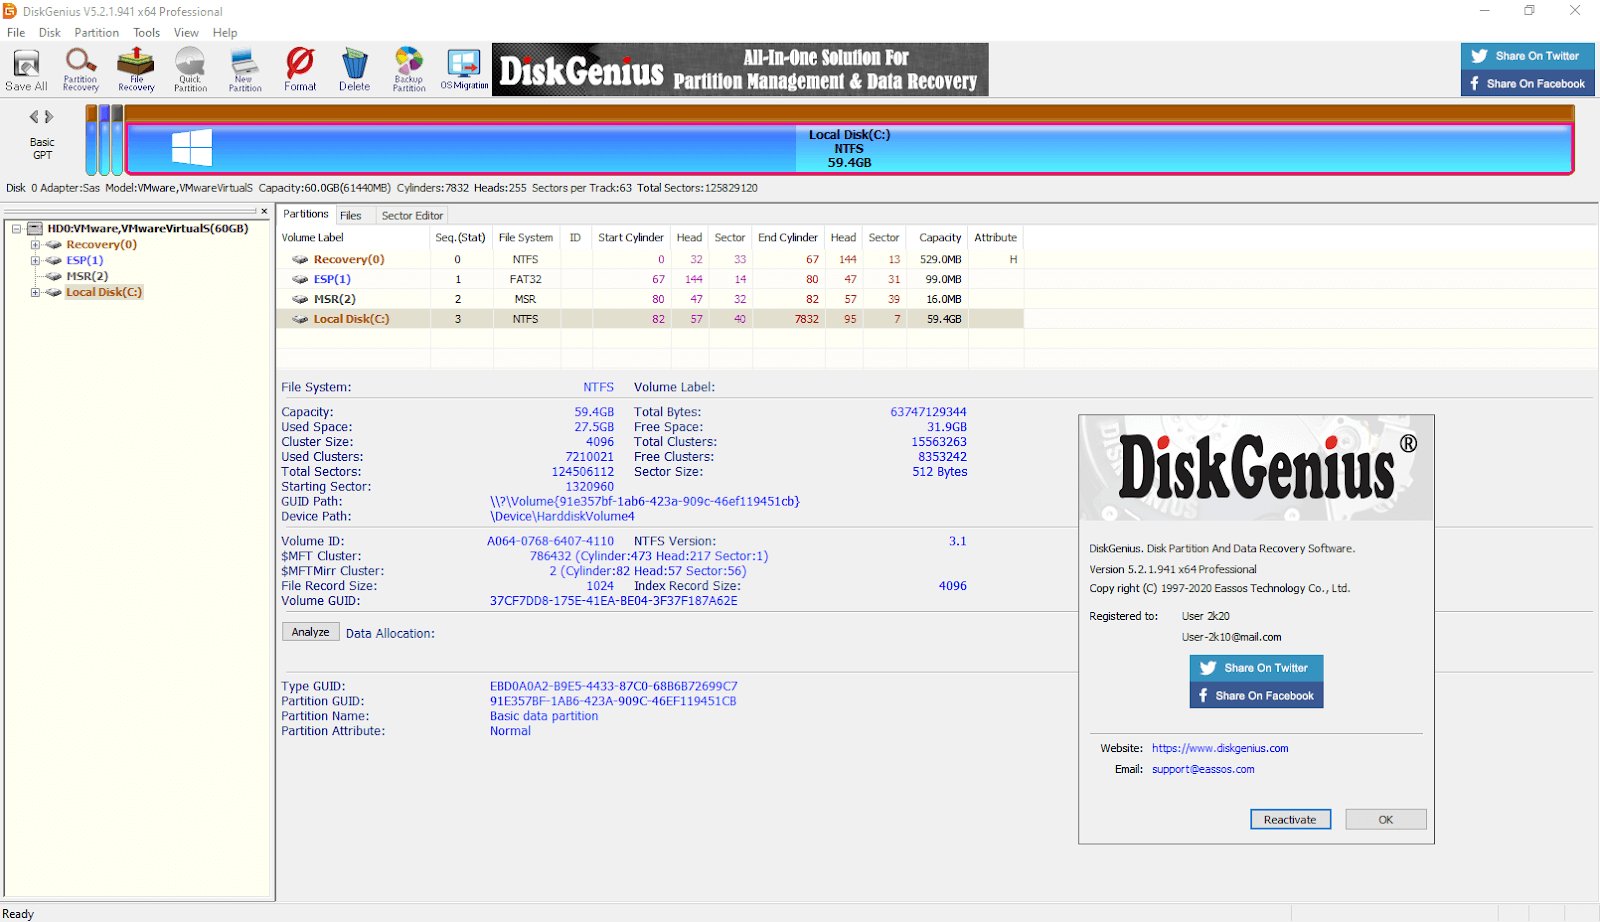 DiskGenius Professional License Number